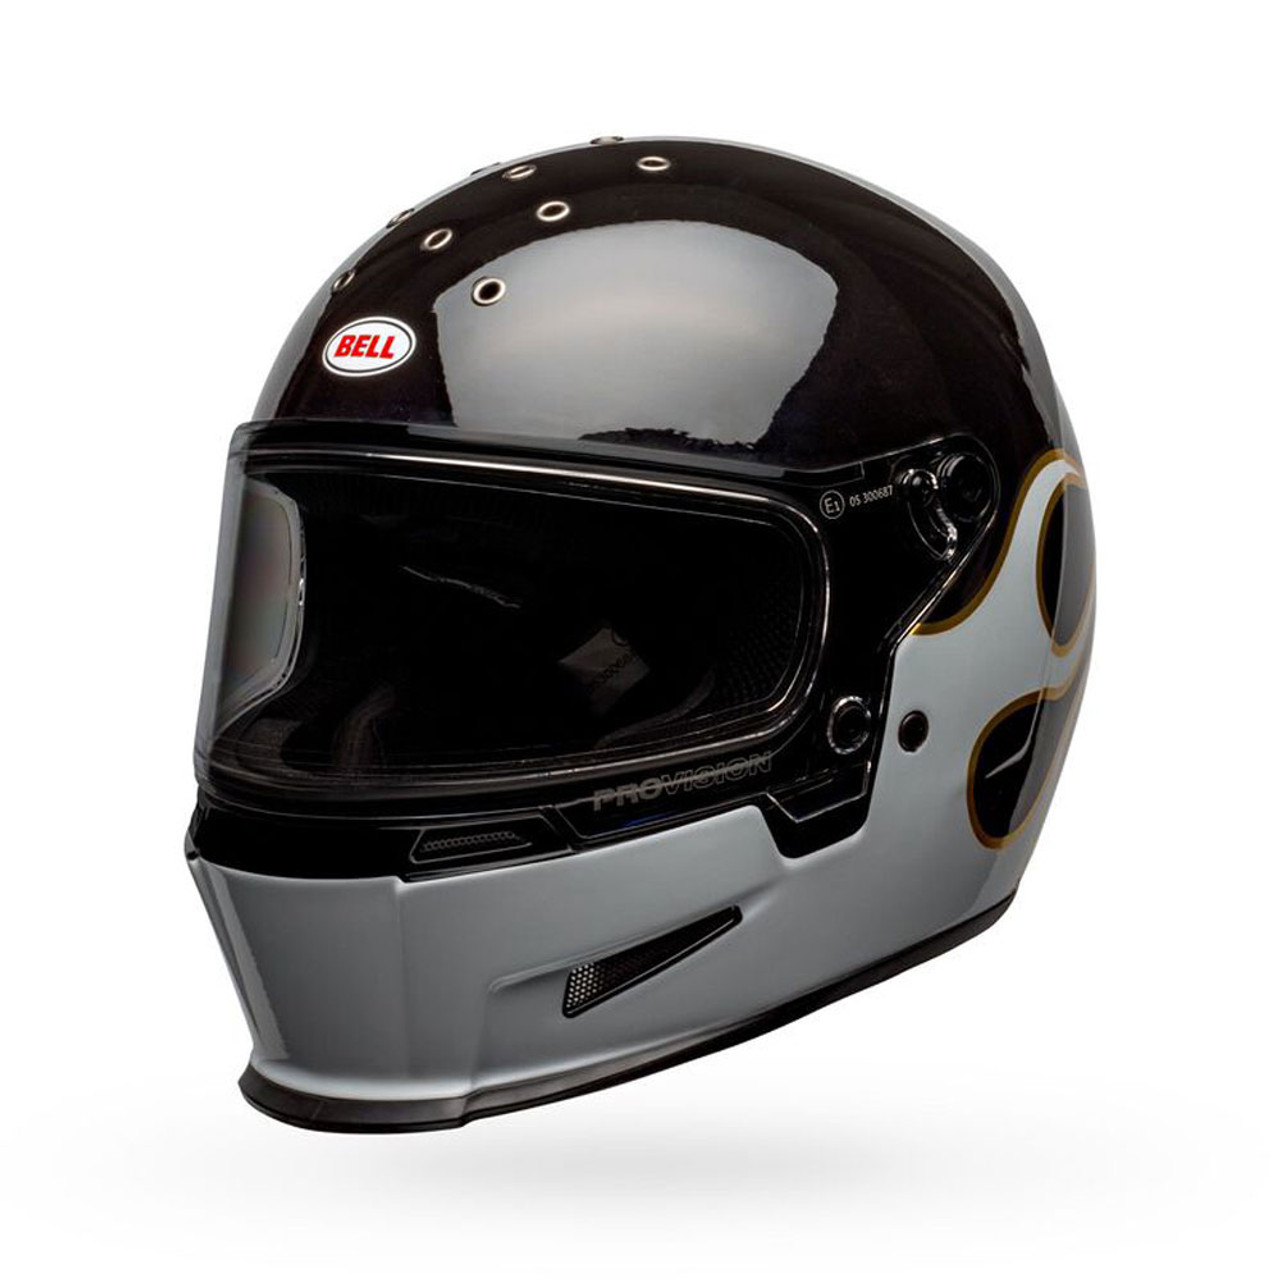 Matte/Gloss Metallic Orange Rally/One Size BELL Eliminator Visor Street Motorcycle Helmet Accessories 